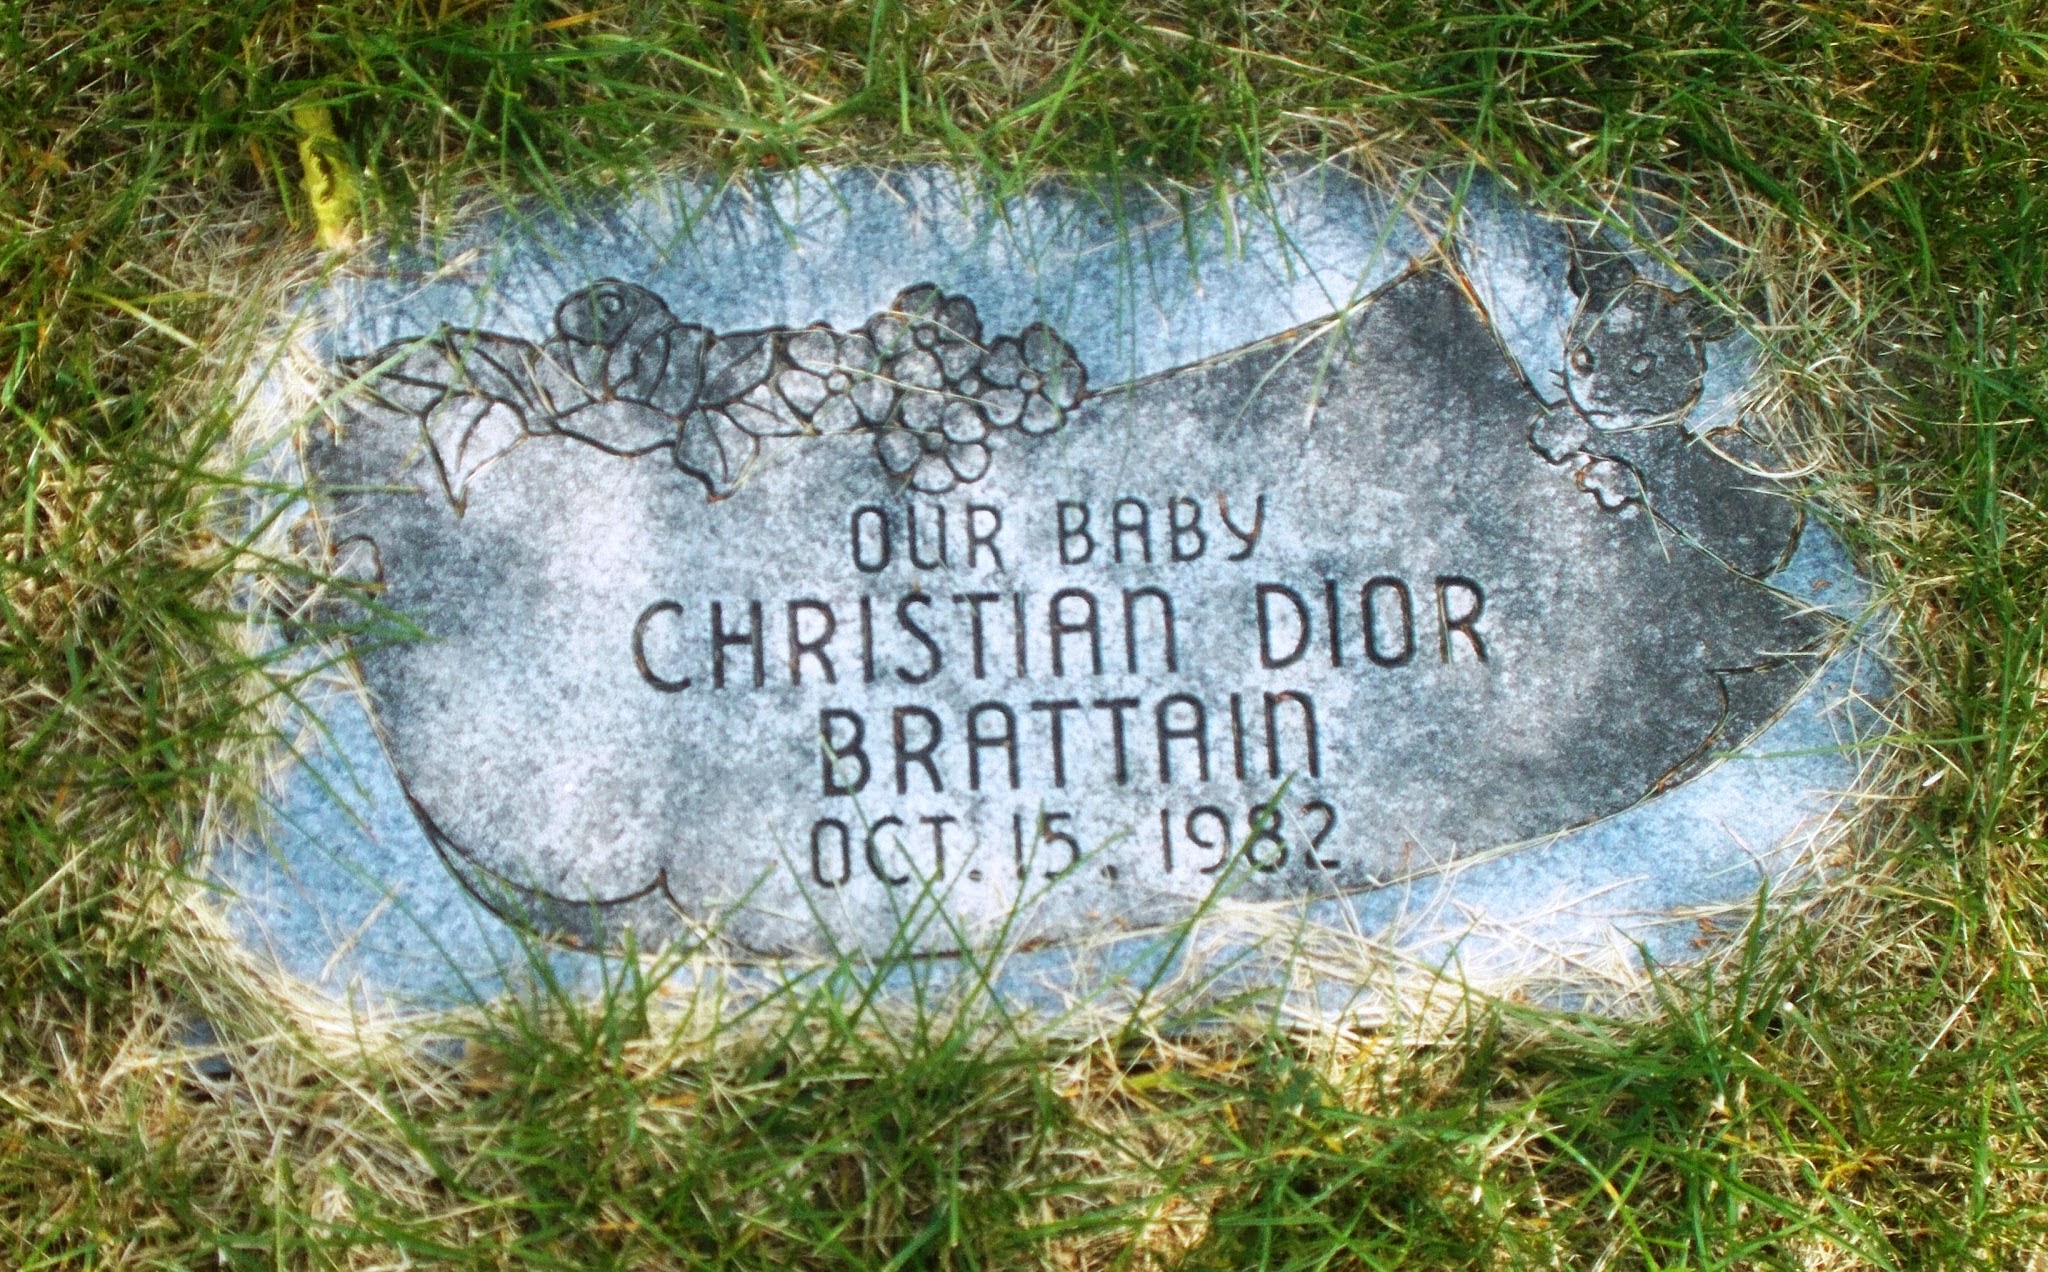 Christian Dior Brattain